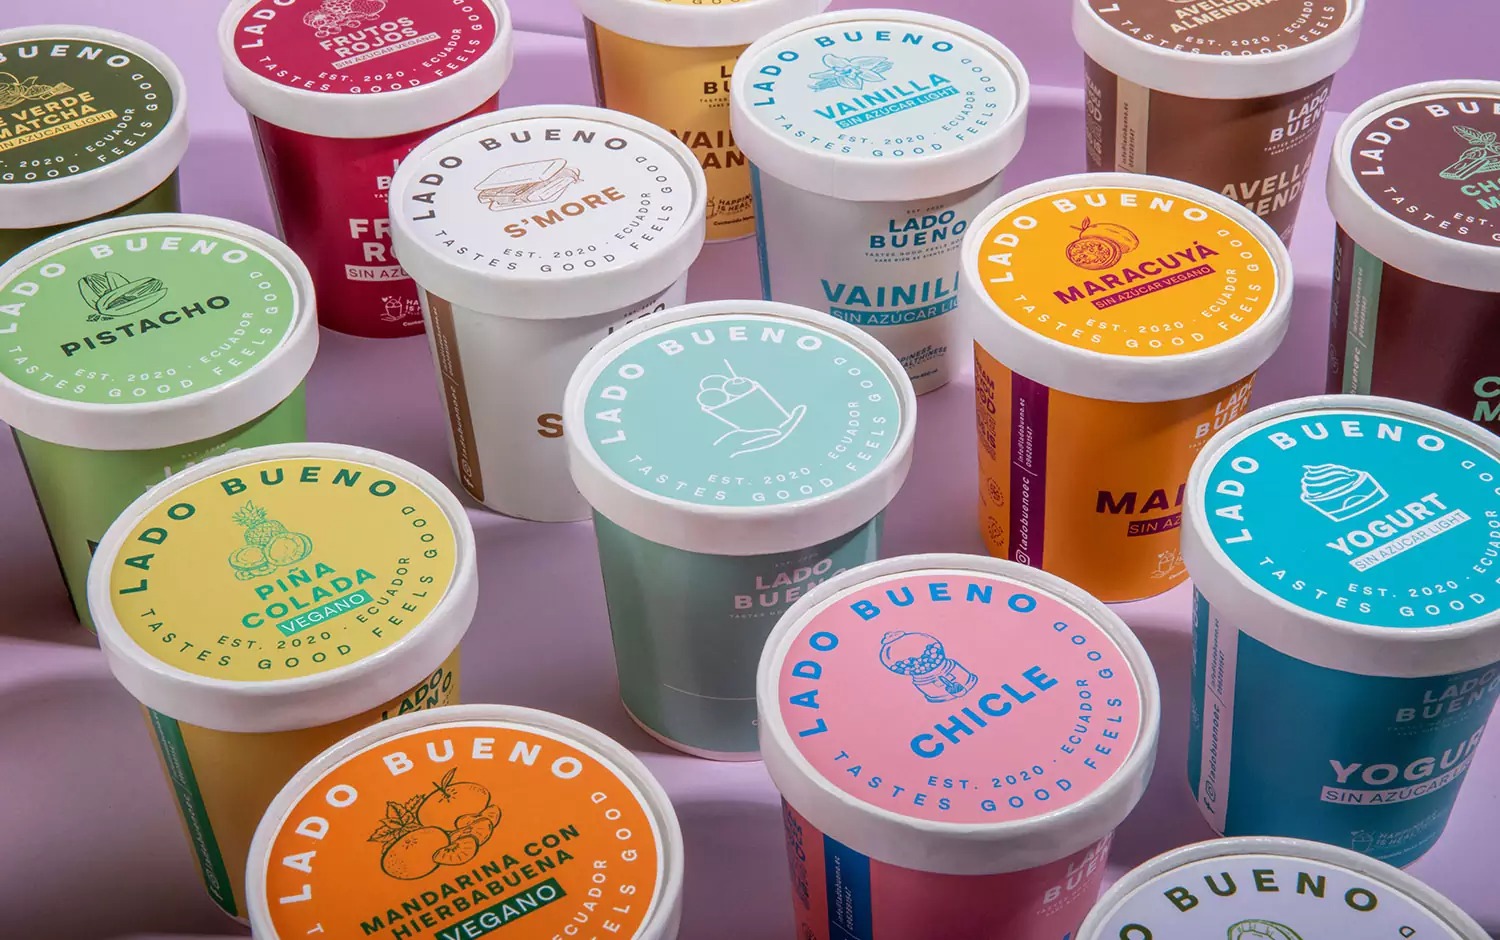 Lado Bueno冰淇淋包装设计